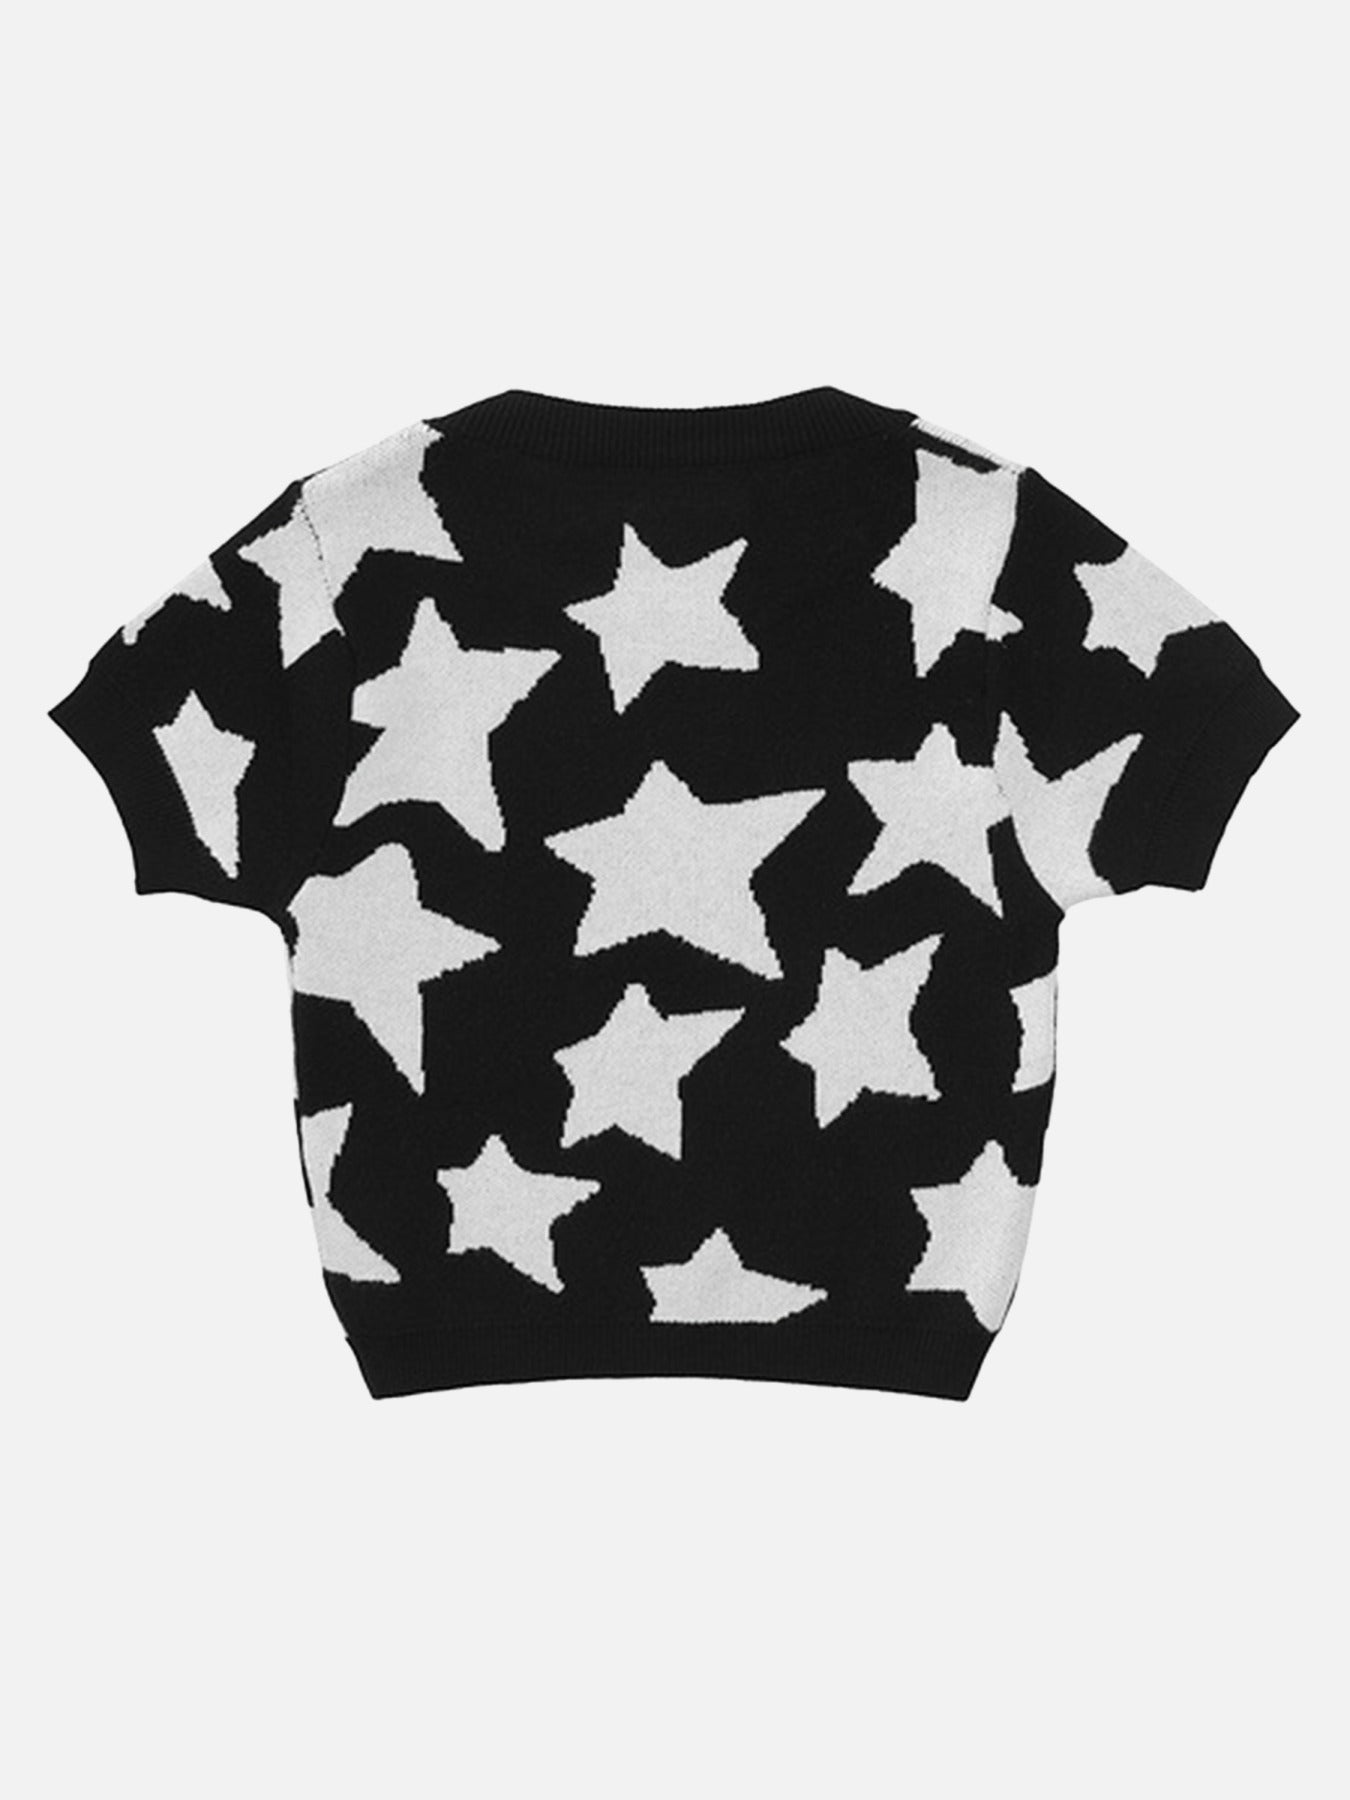 The Supermade Retro Stars Jacquard Slim Fit Knit T-shirt